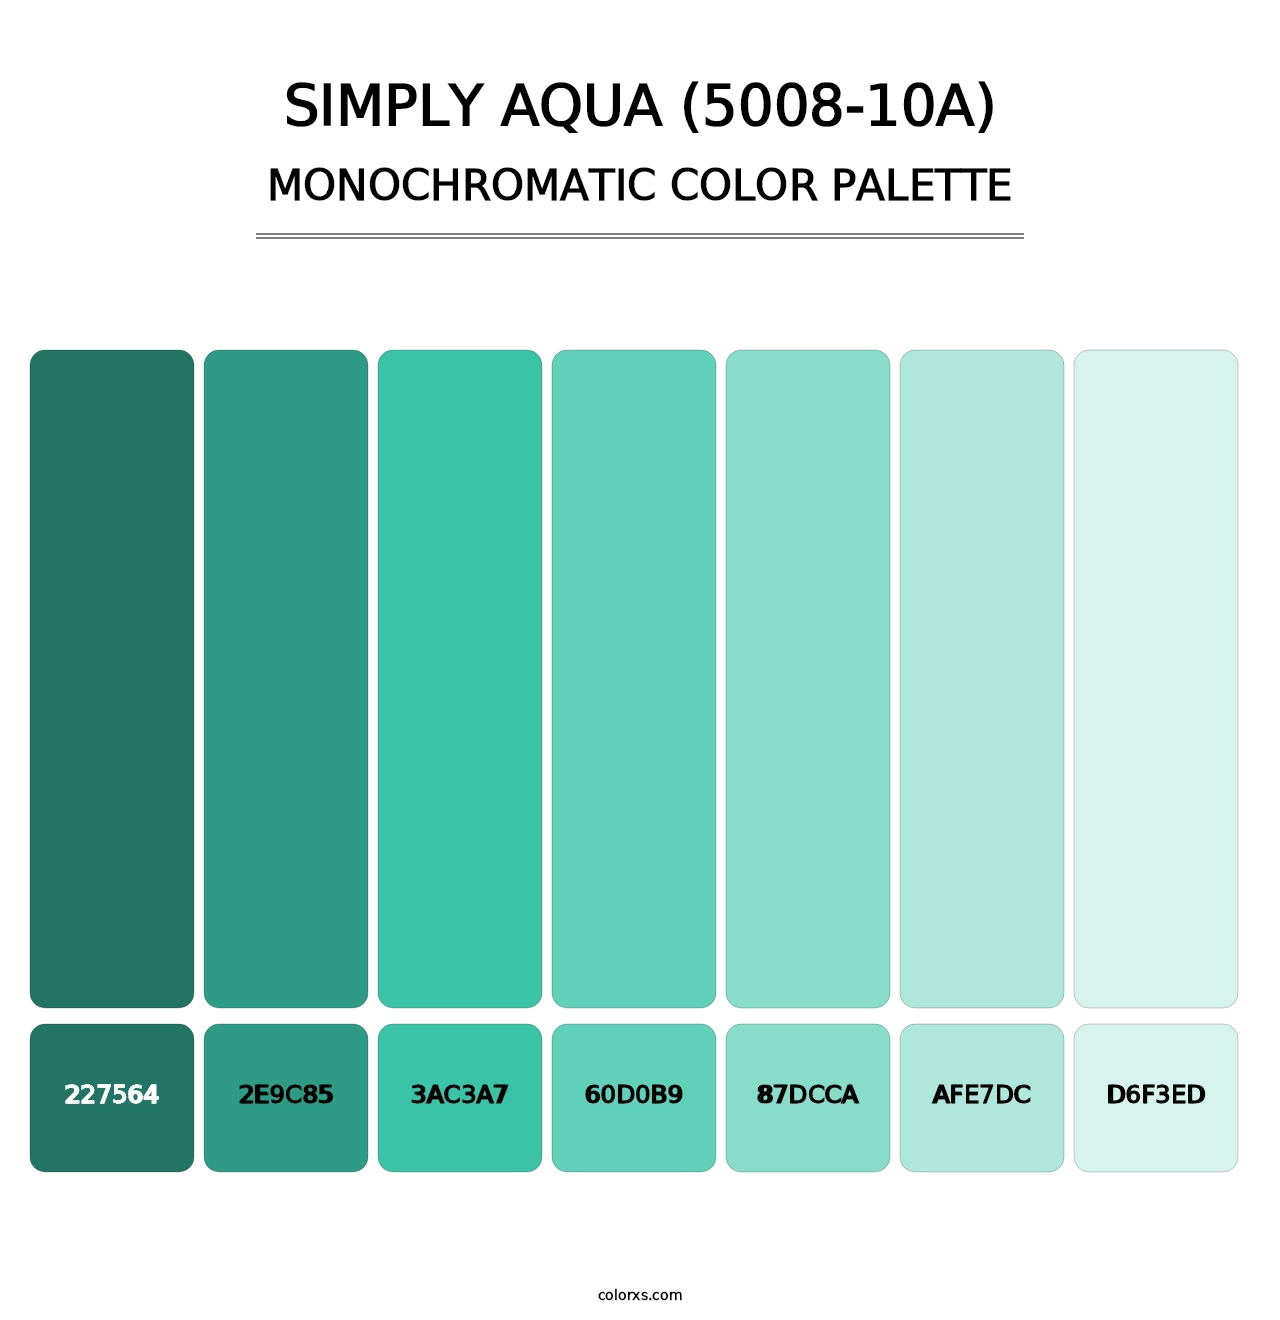 Simply Aqua (5008-10A) - Monochromatic Color Palette